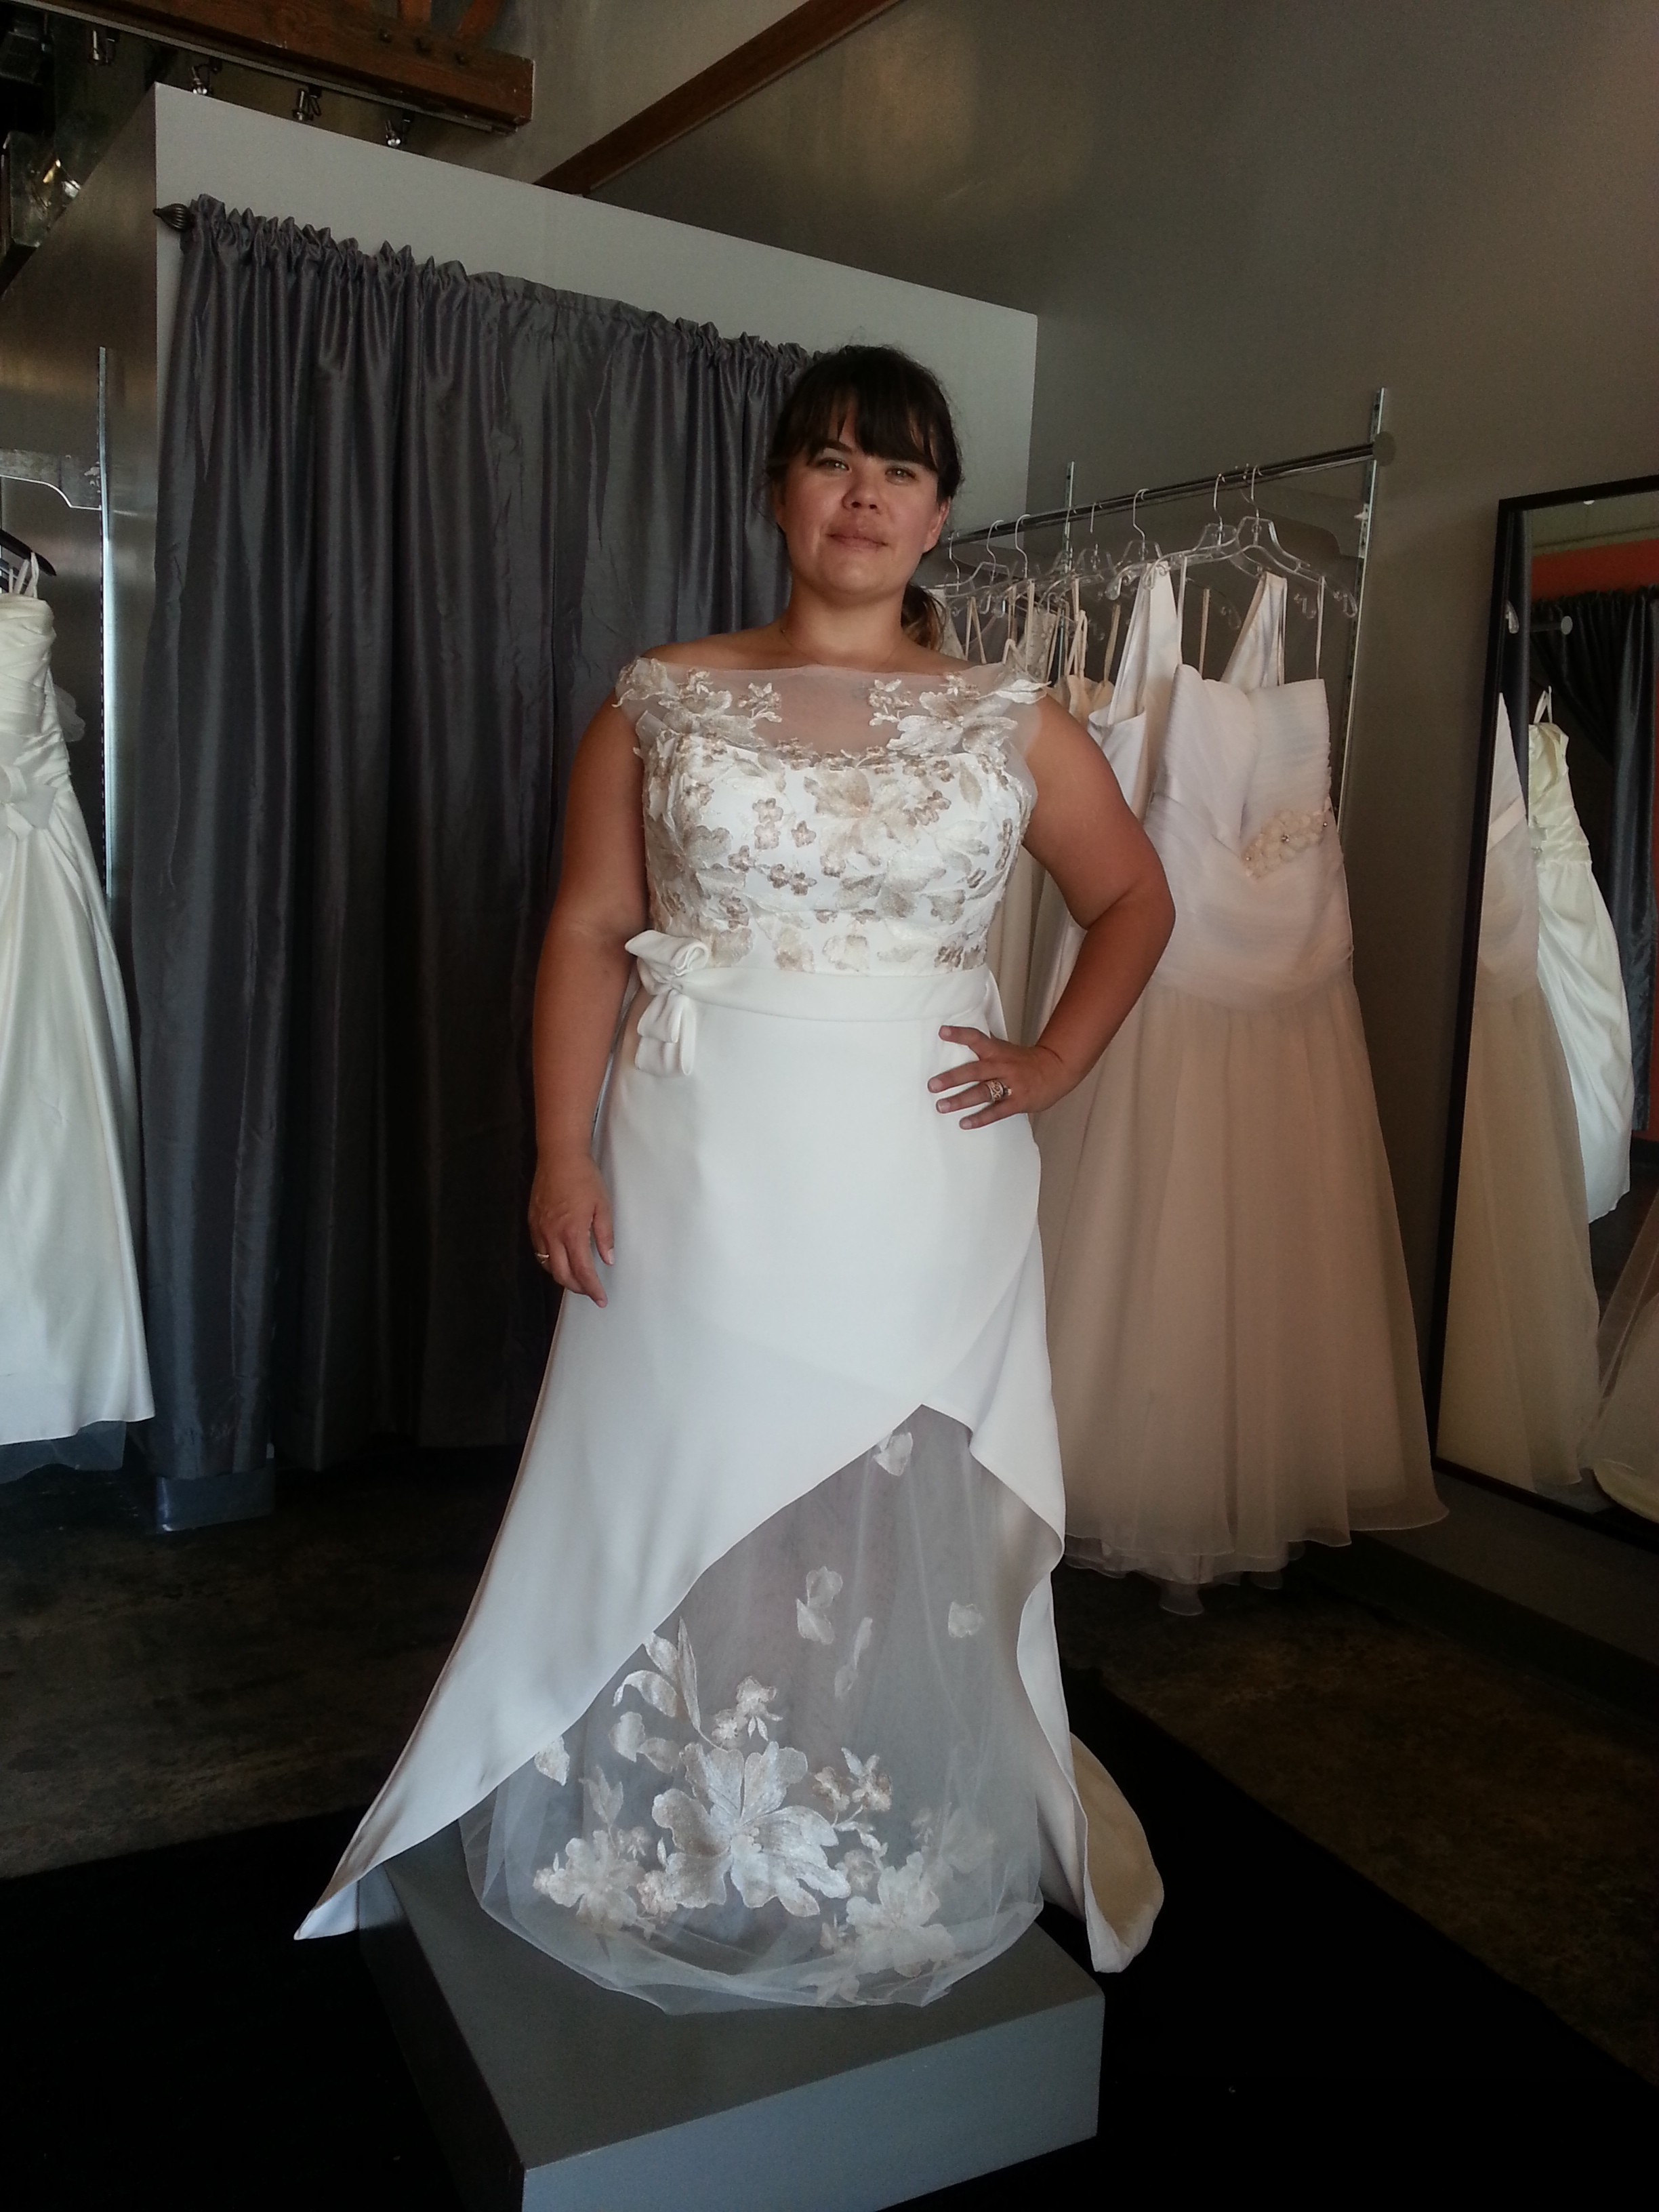 How To Shop For A Wedding Dress Part 2 Strut Bridal Salon